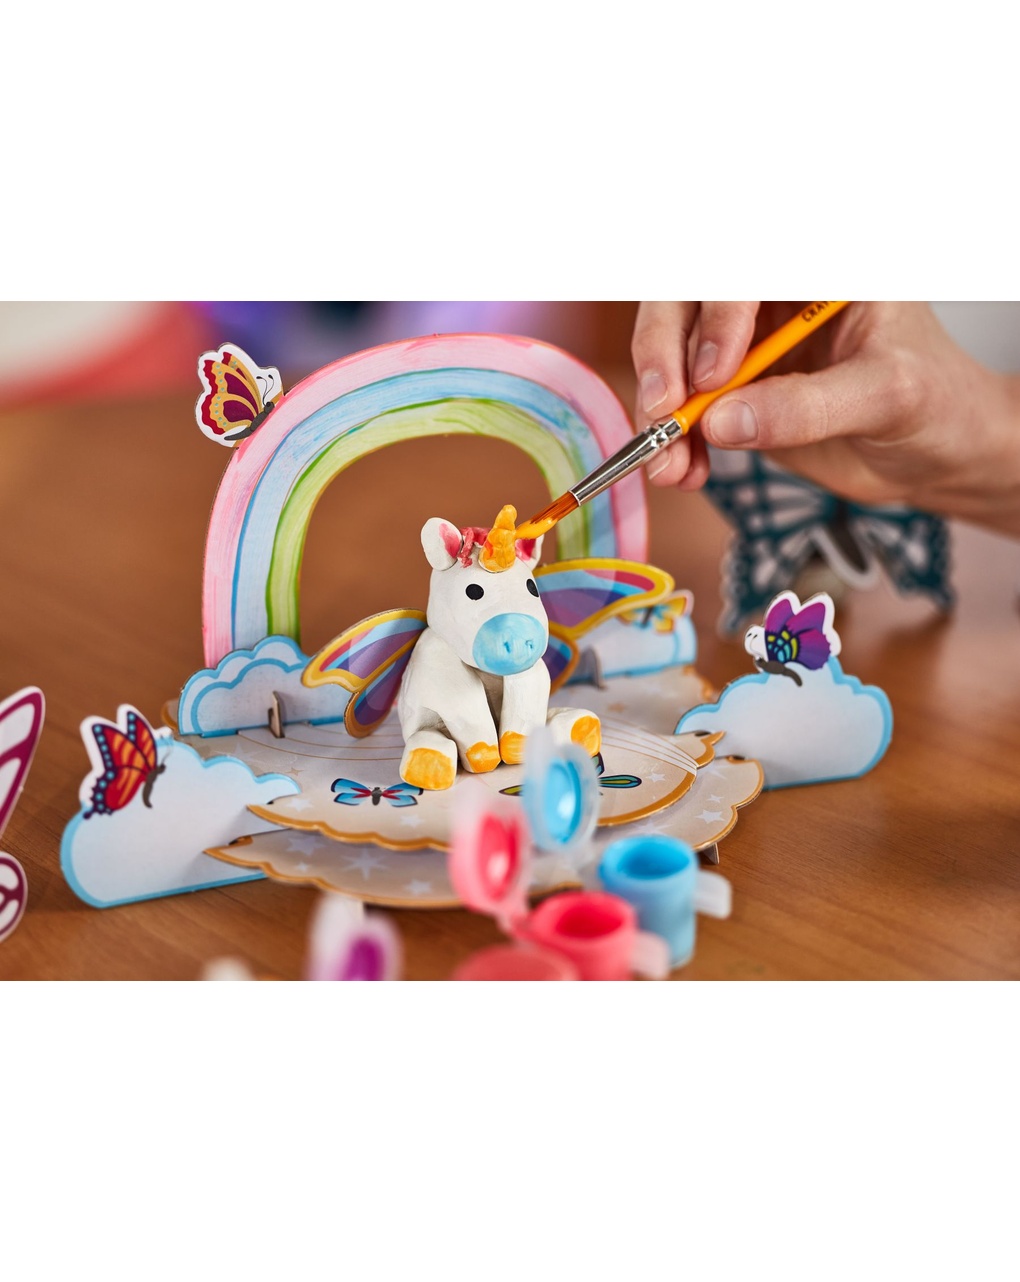 Set modella & dipingi il tuo unicorno, argilla modellabile - crayola - Crayola